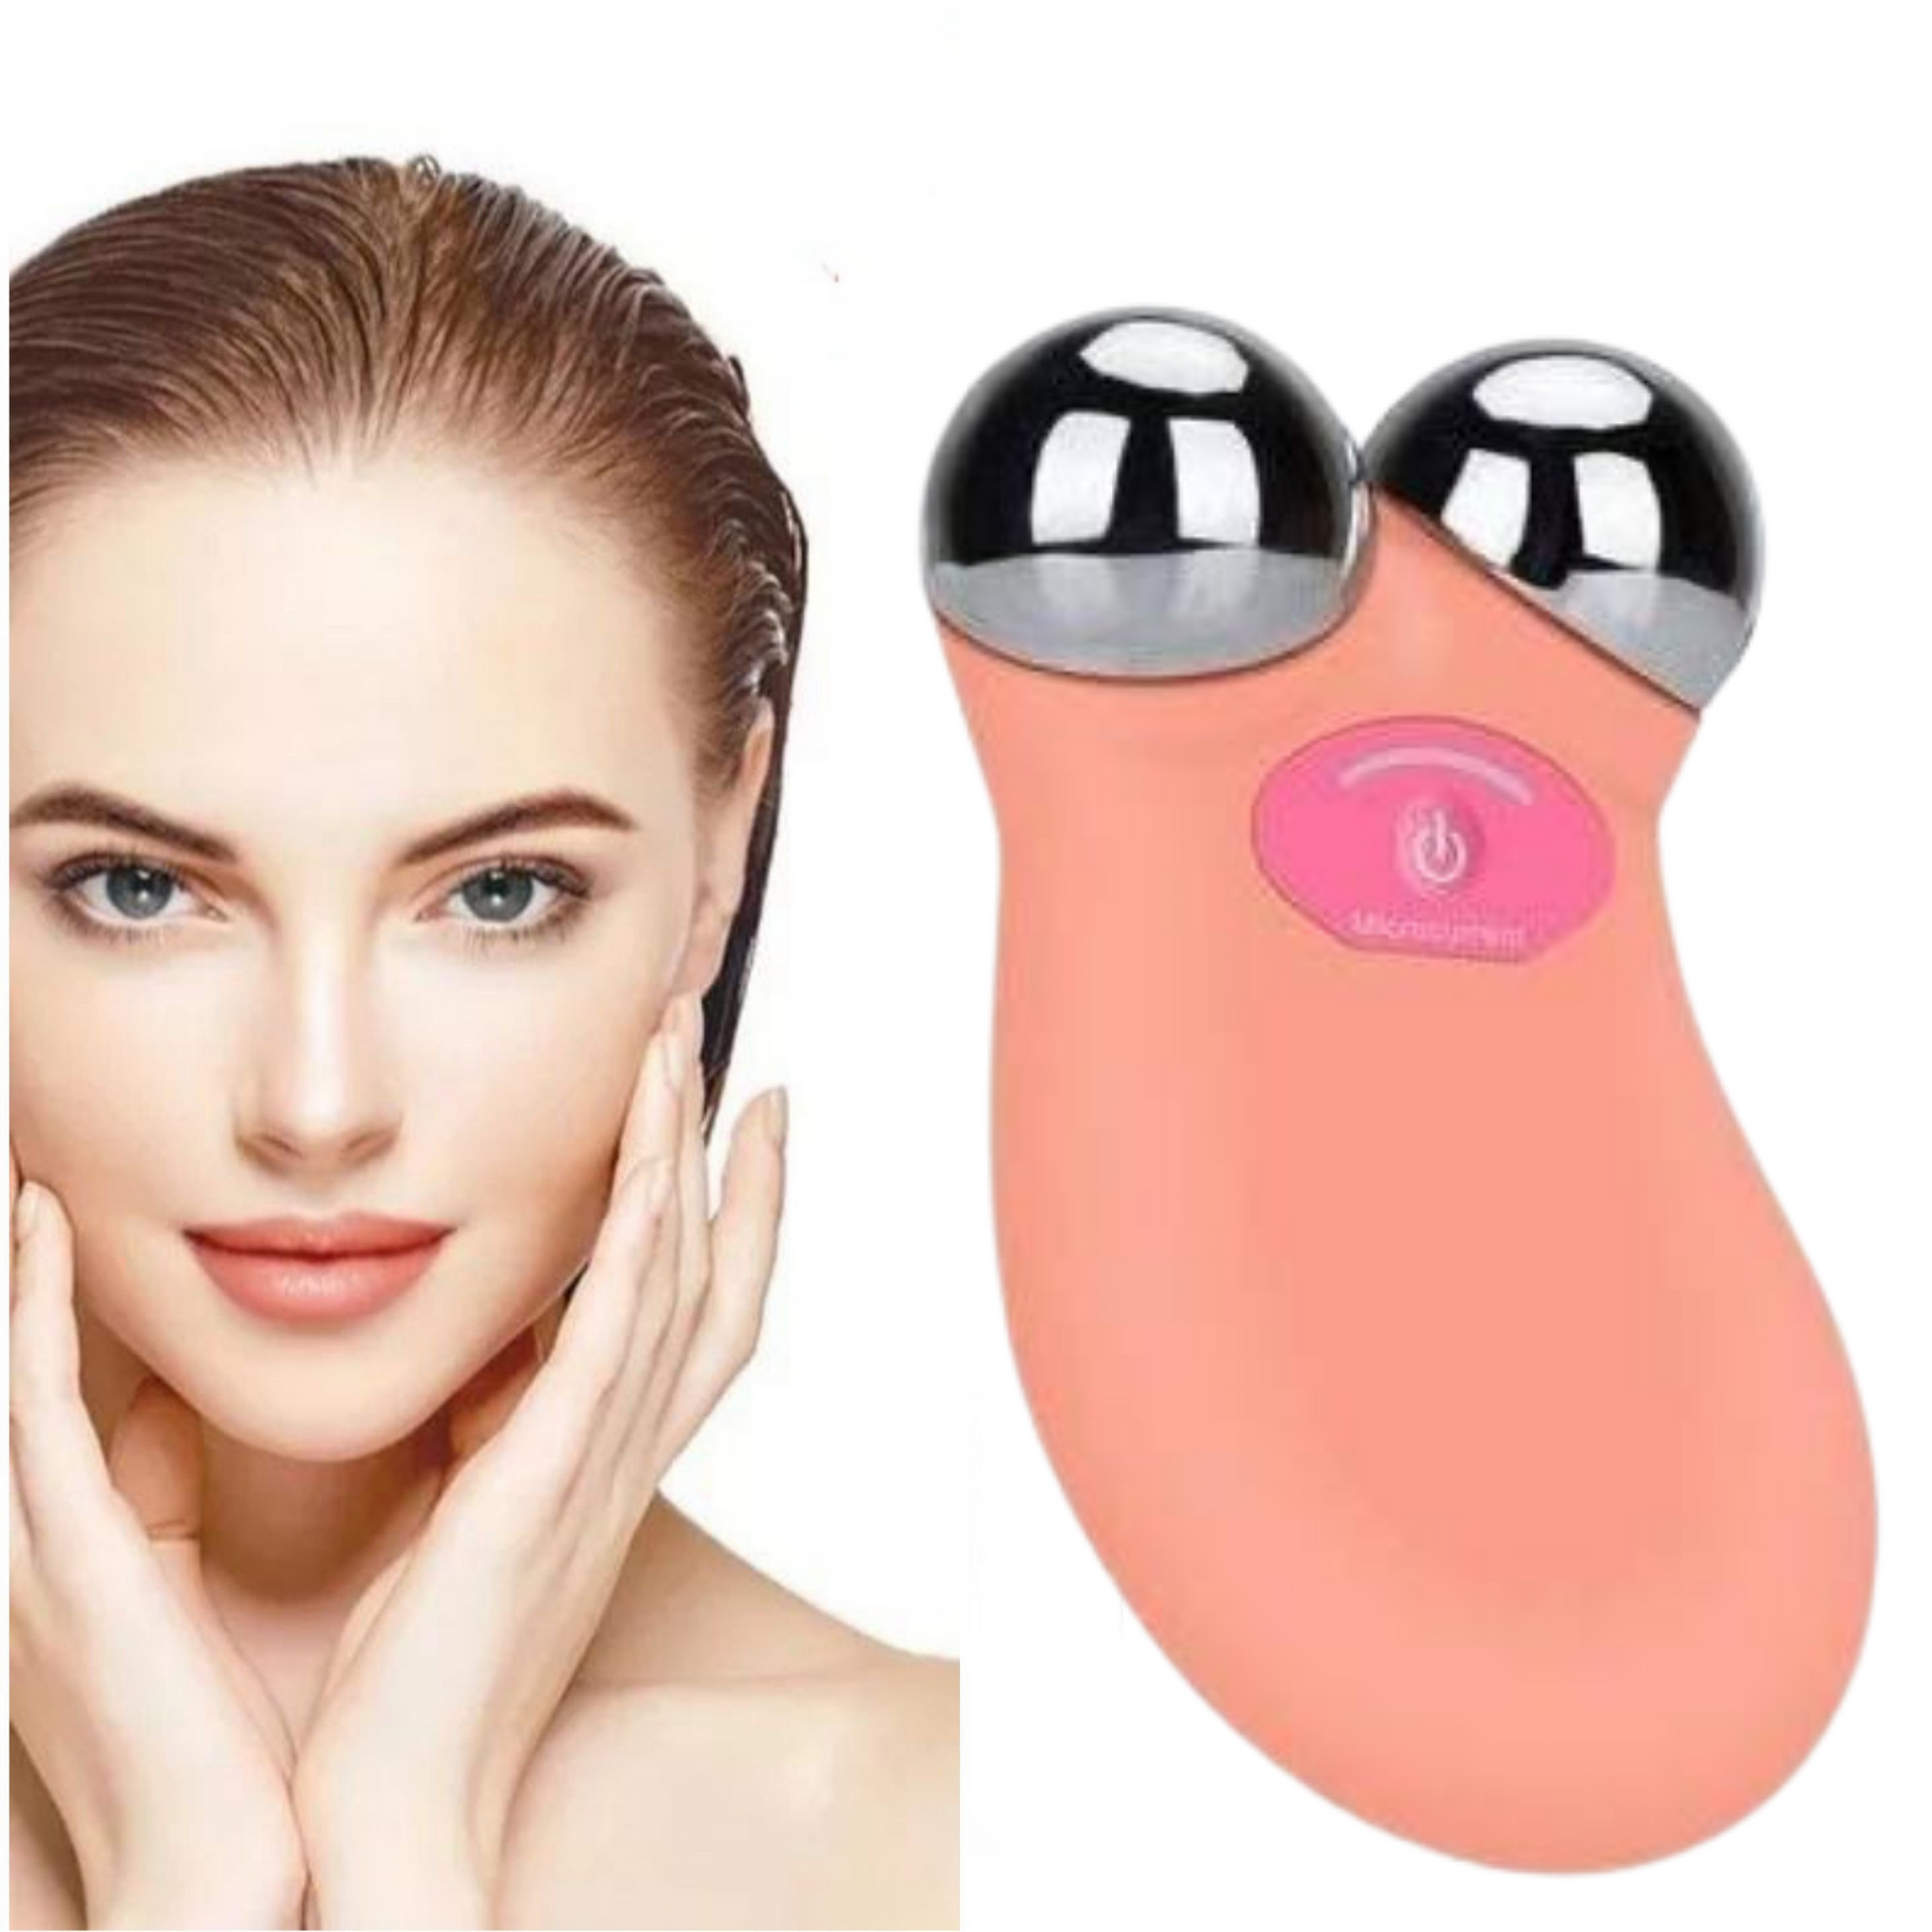 Mini Facial Toning Device Facial Device, color Orange Pink | Retail Box, Instructions 